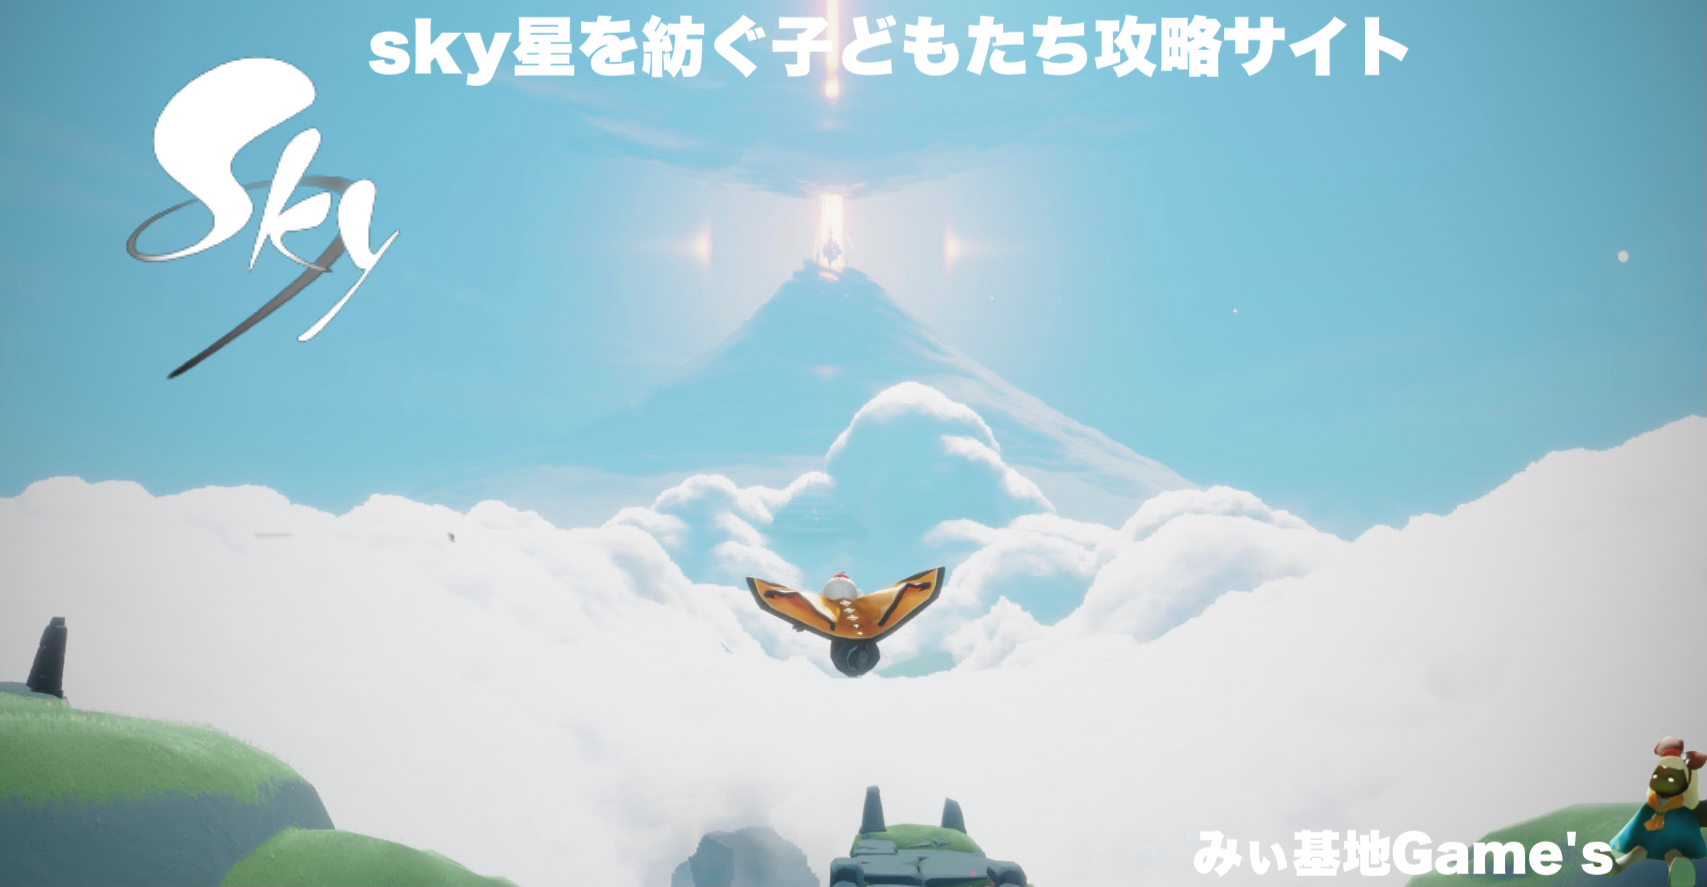 Sky星を紡ぐ子どもたち攻略 | Sky攻略情報局 - ゲームウィキ.jp